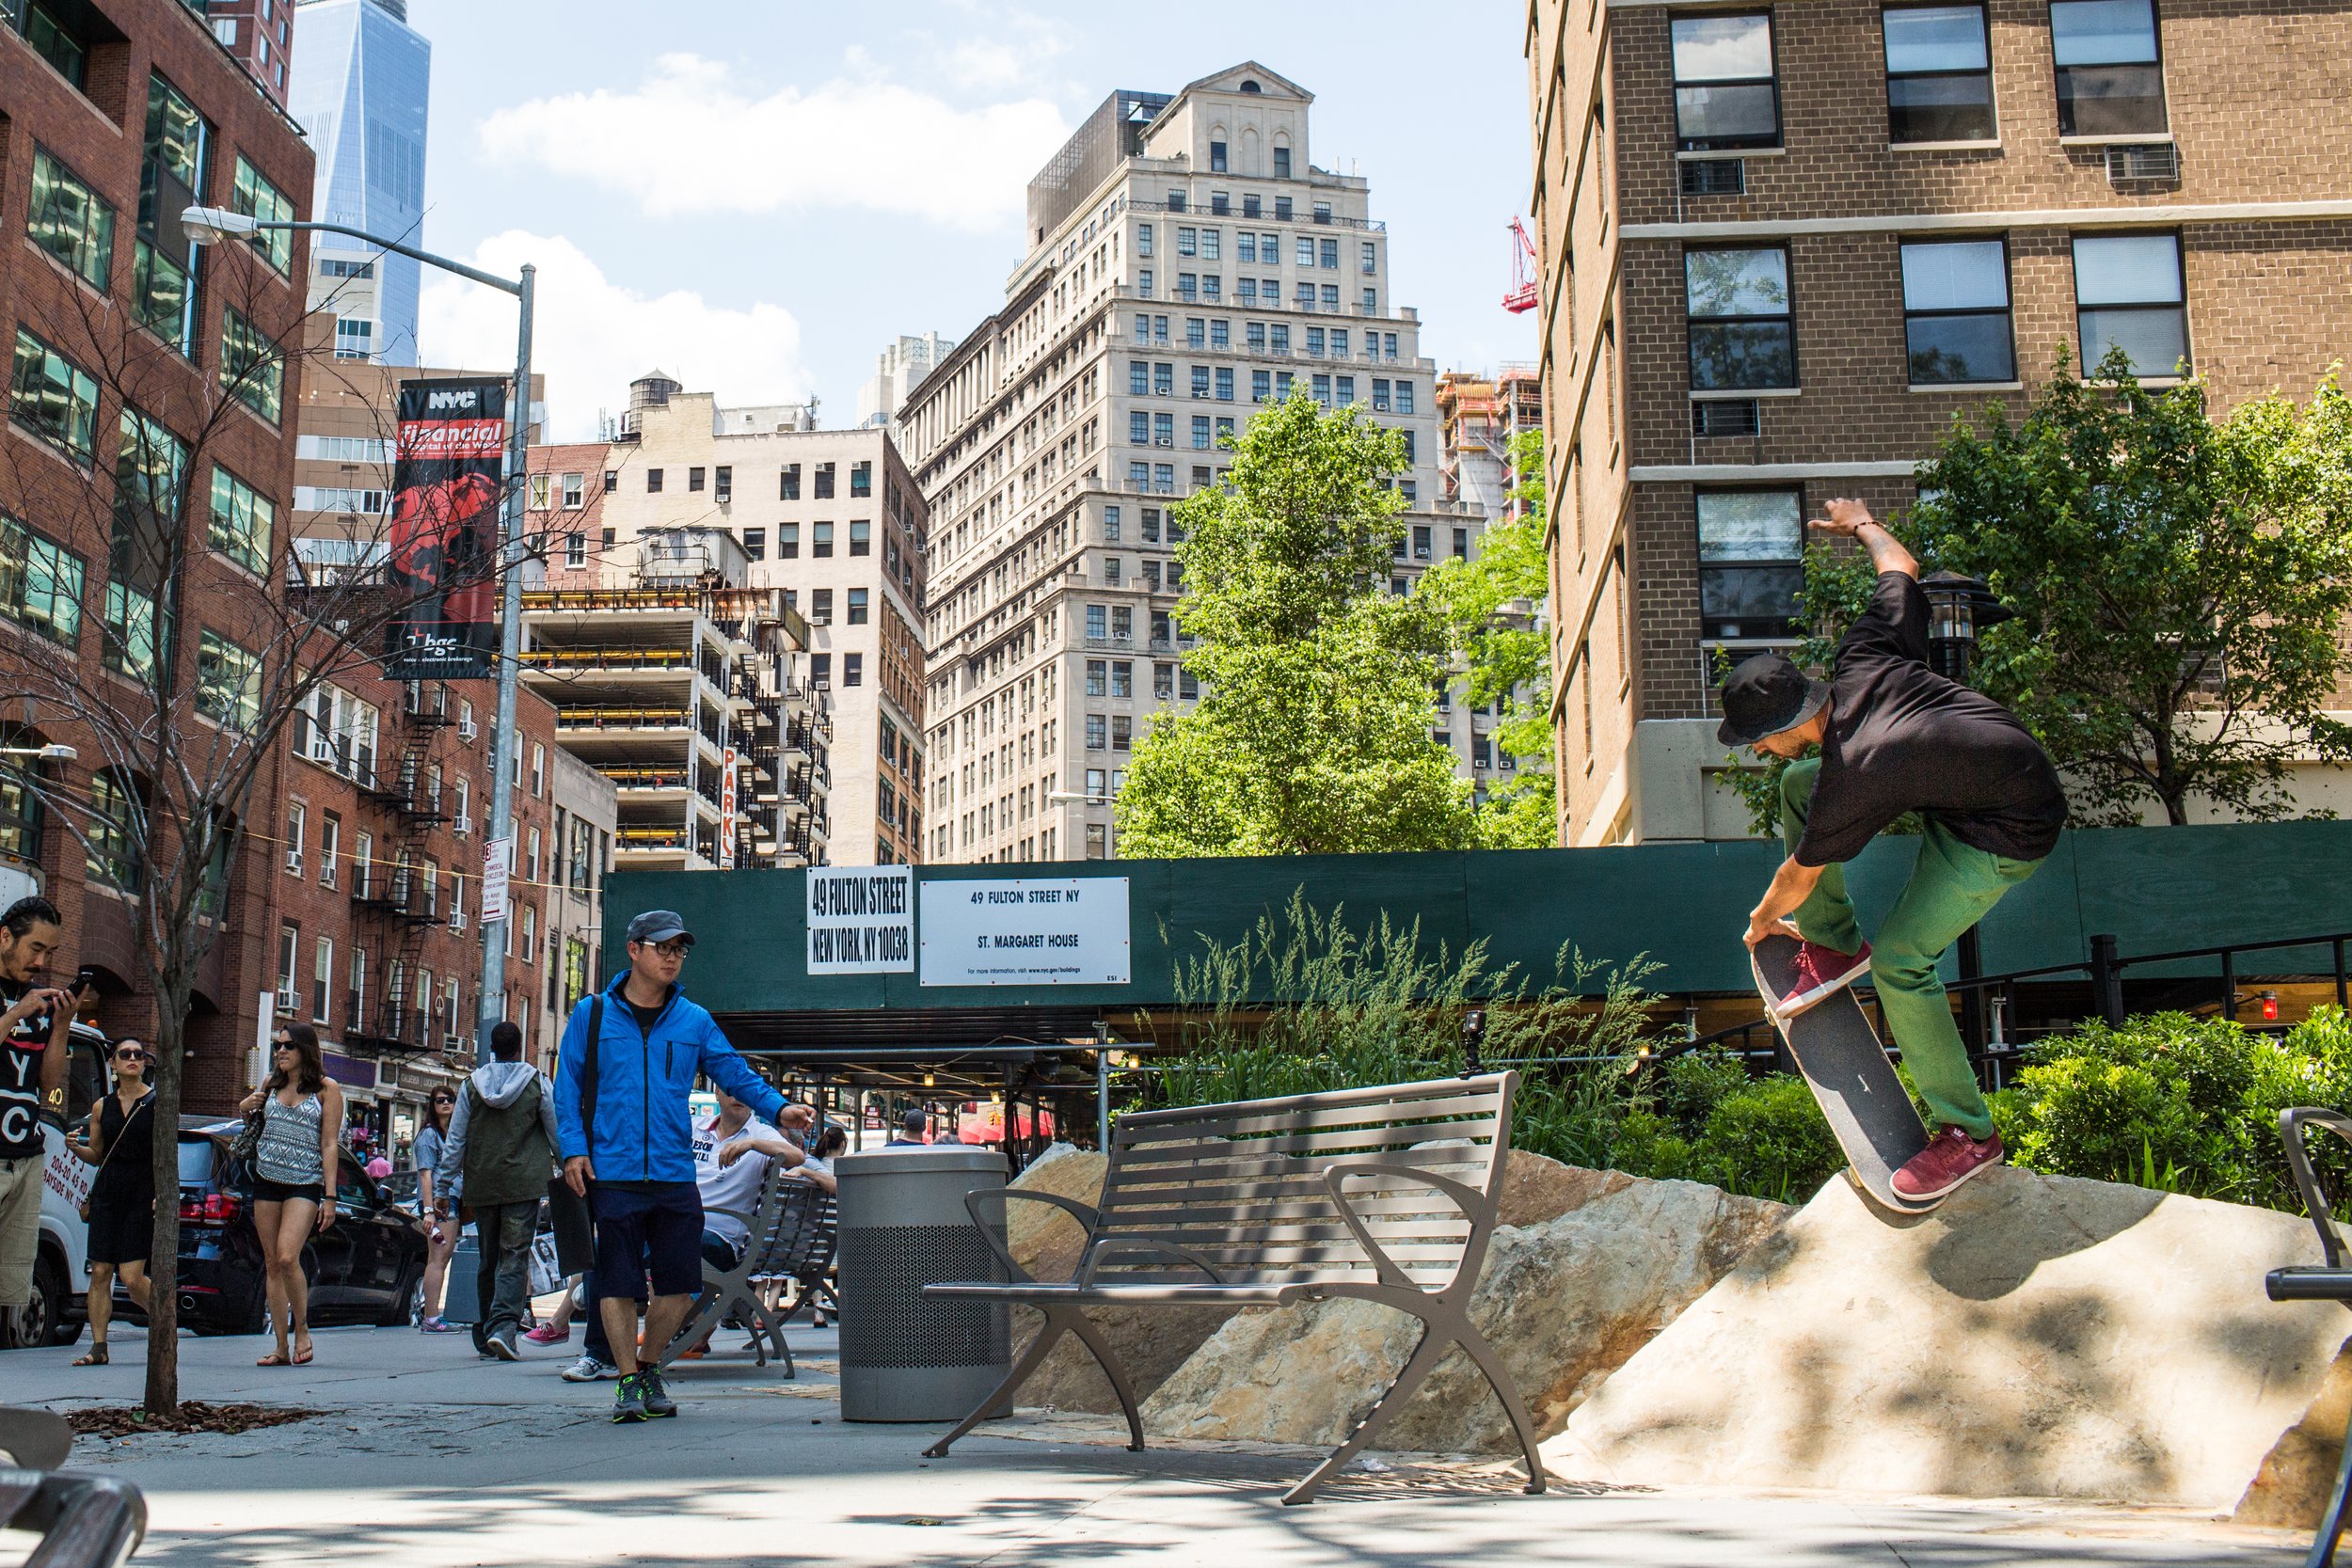  skateboarder in New York City  